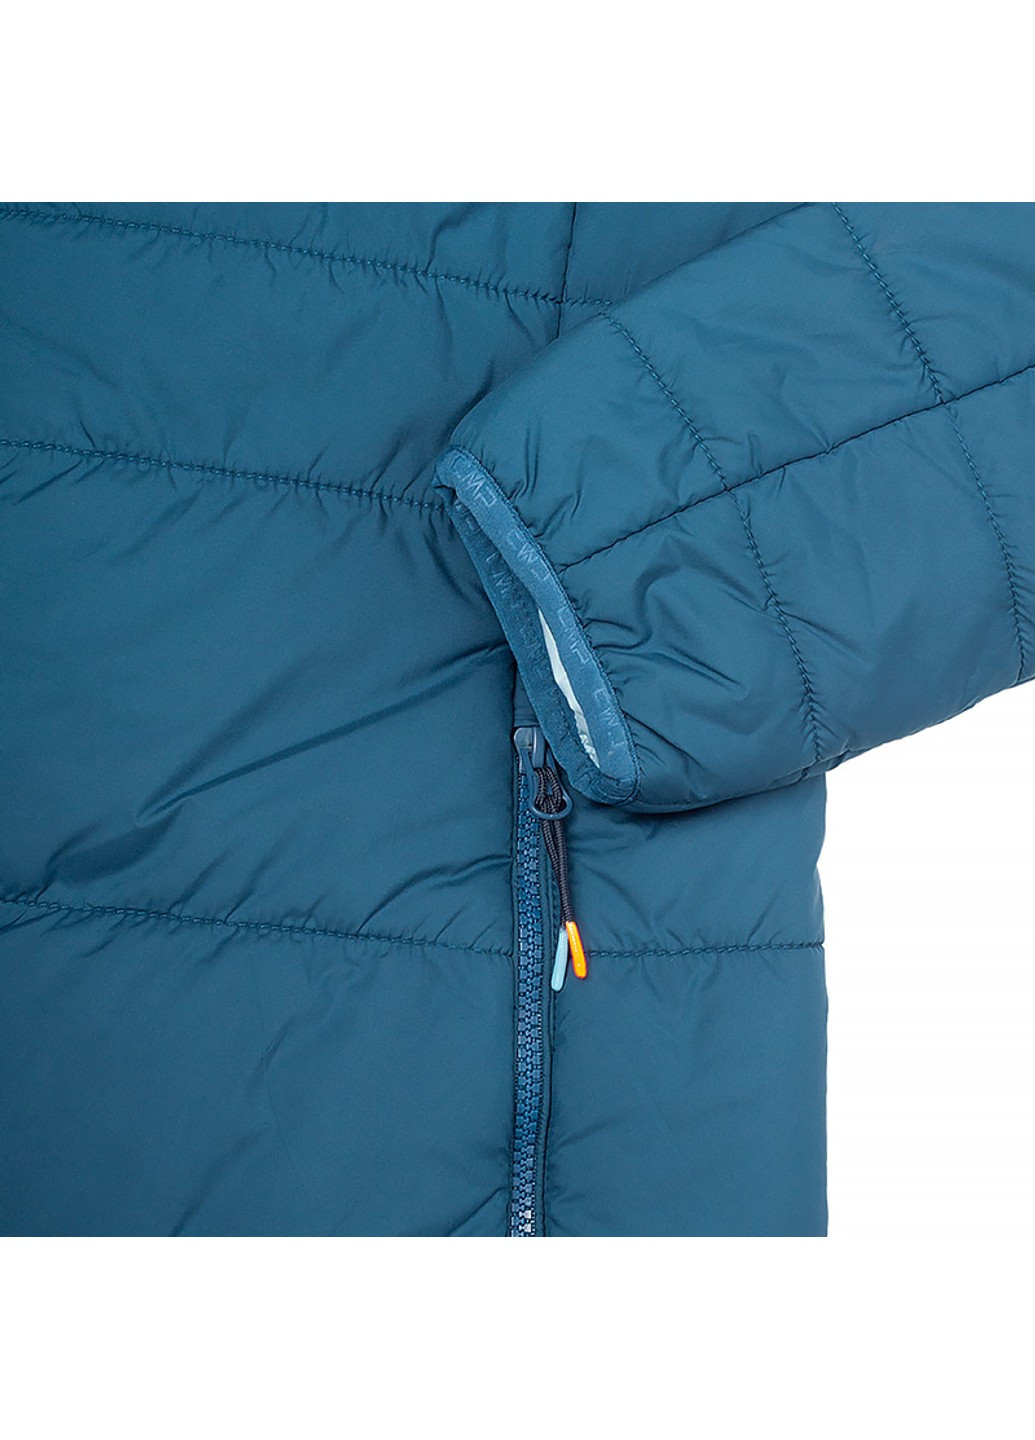 Синяя зимняя куртка jacket long fix hood CMP